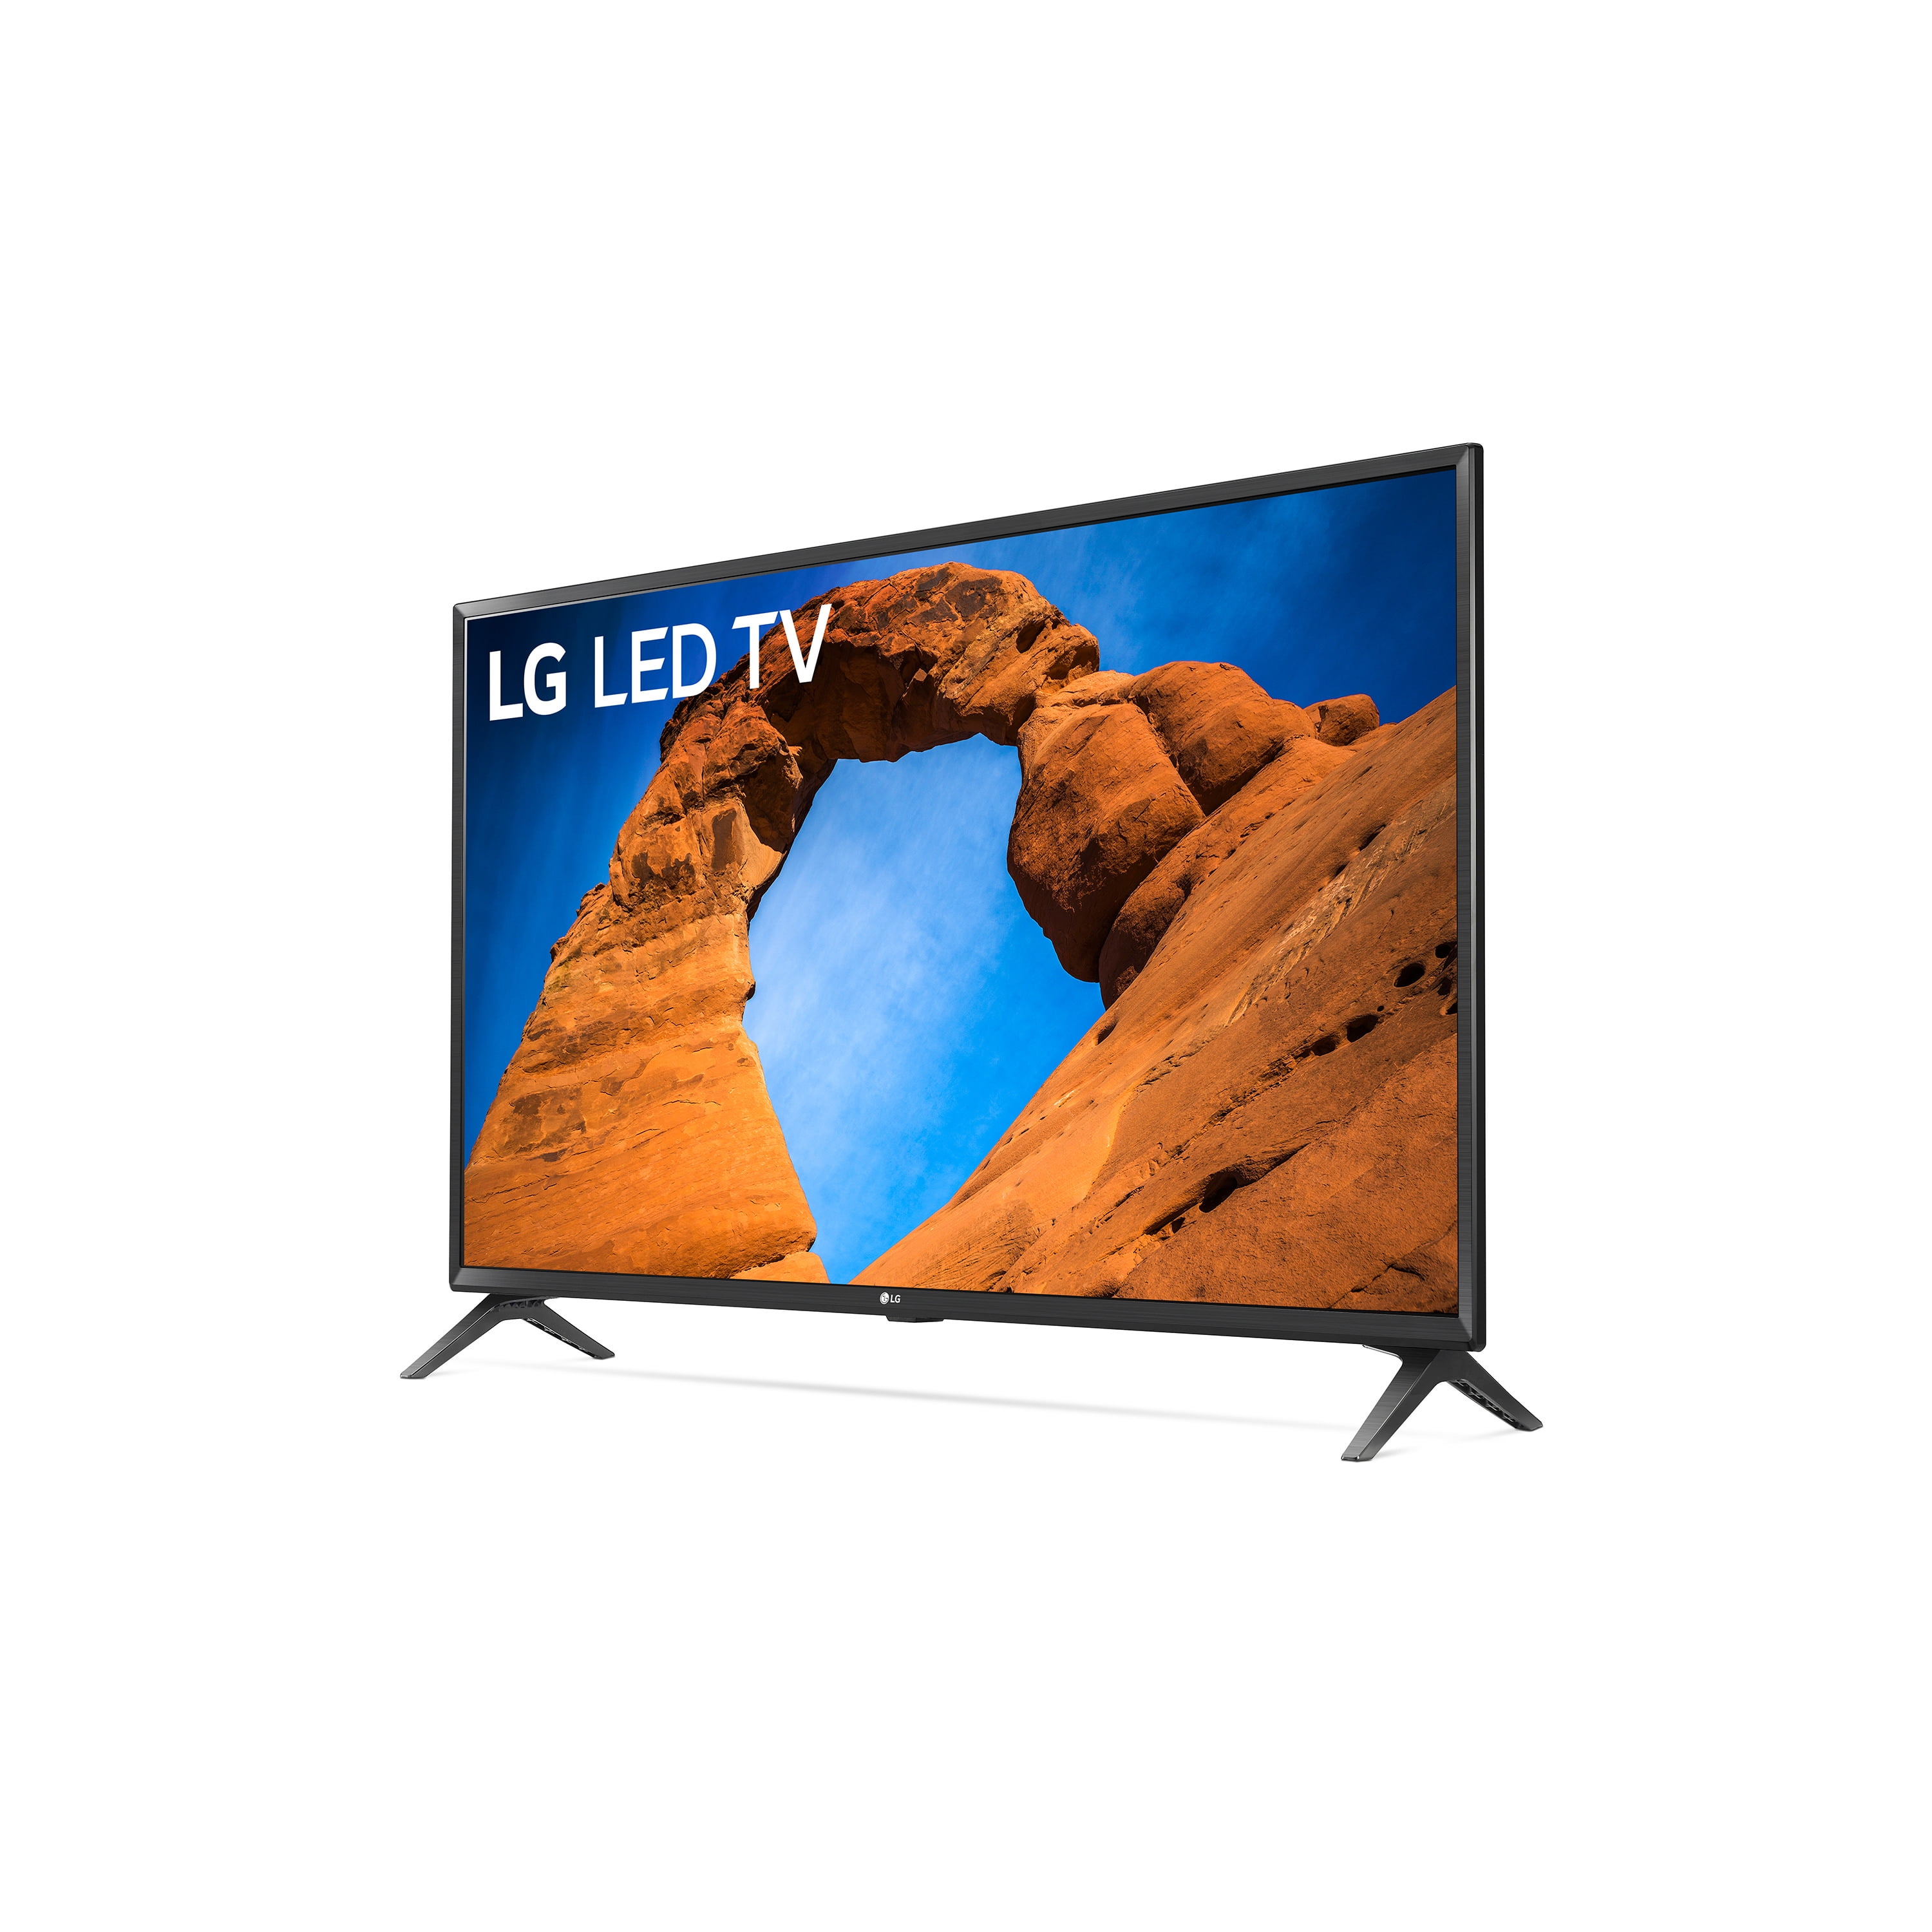 celestial generation Ultimate LG 49" Class Full HD (1080P) HDR Smart LED Full HD TV - 49LK5700PUA -  Walmart.com